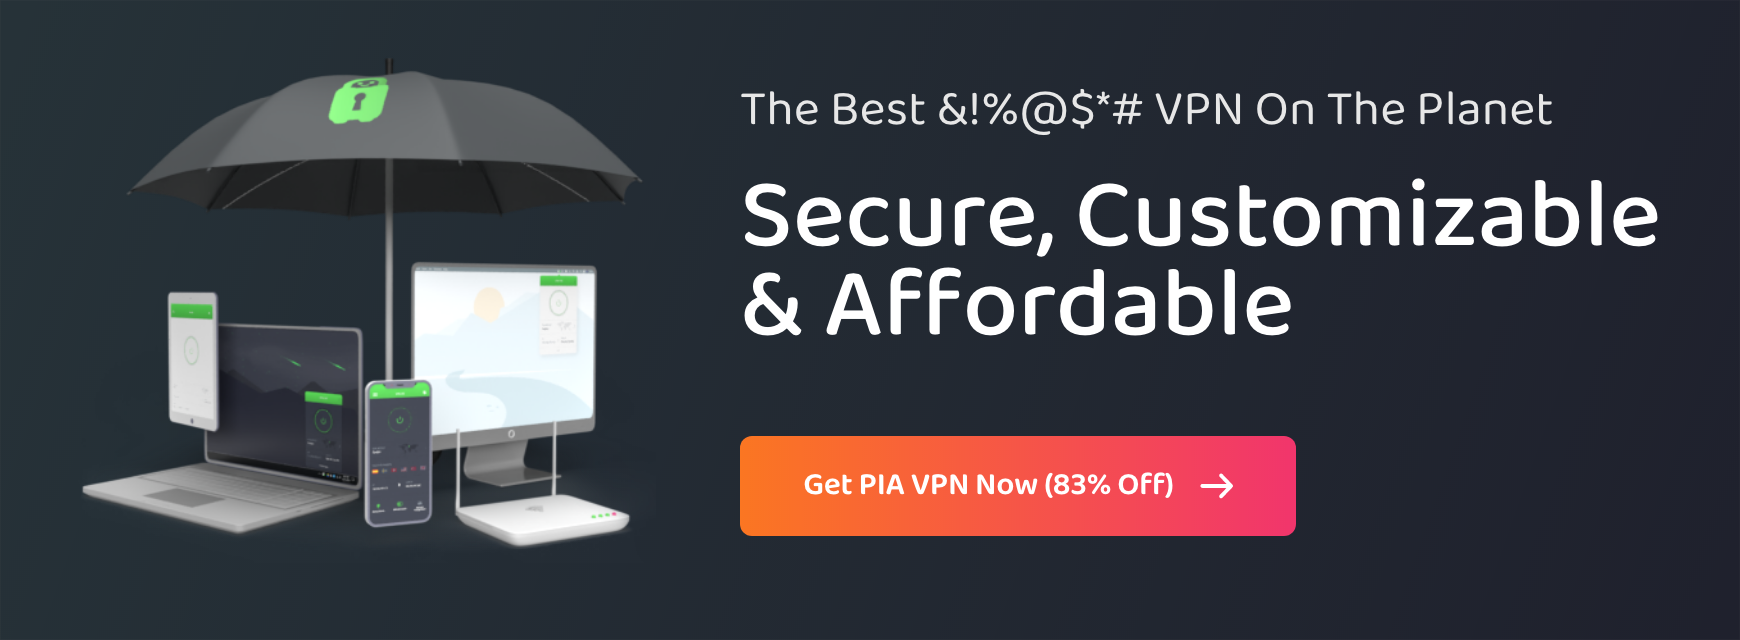 Servizio VPN